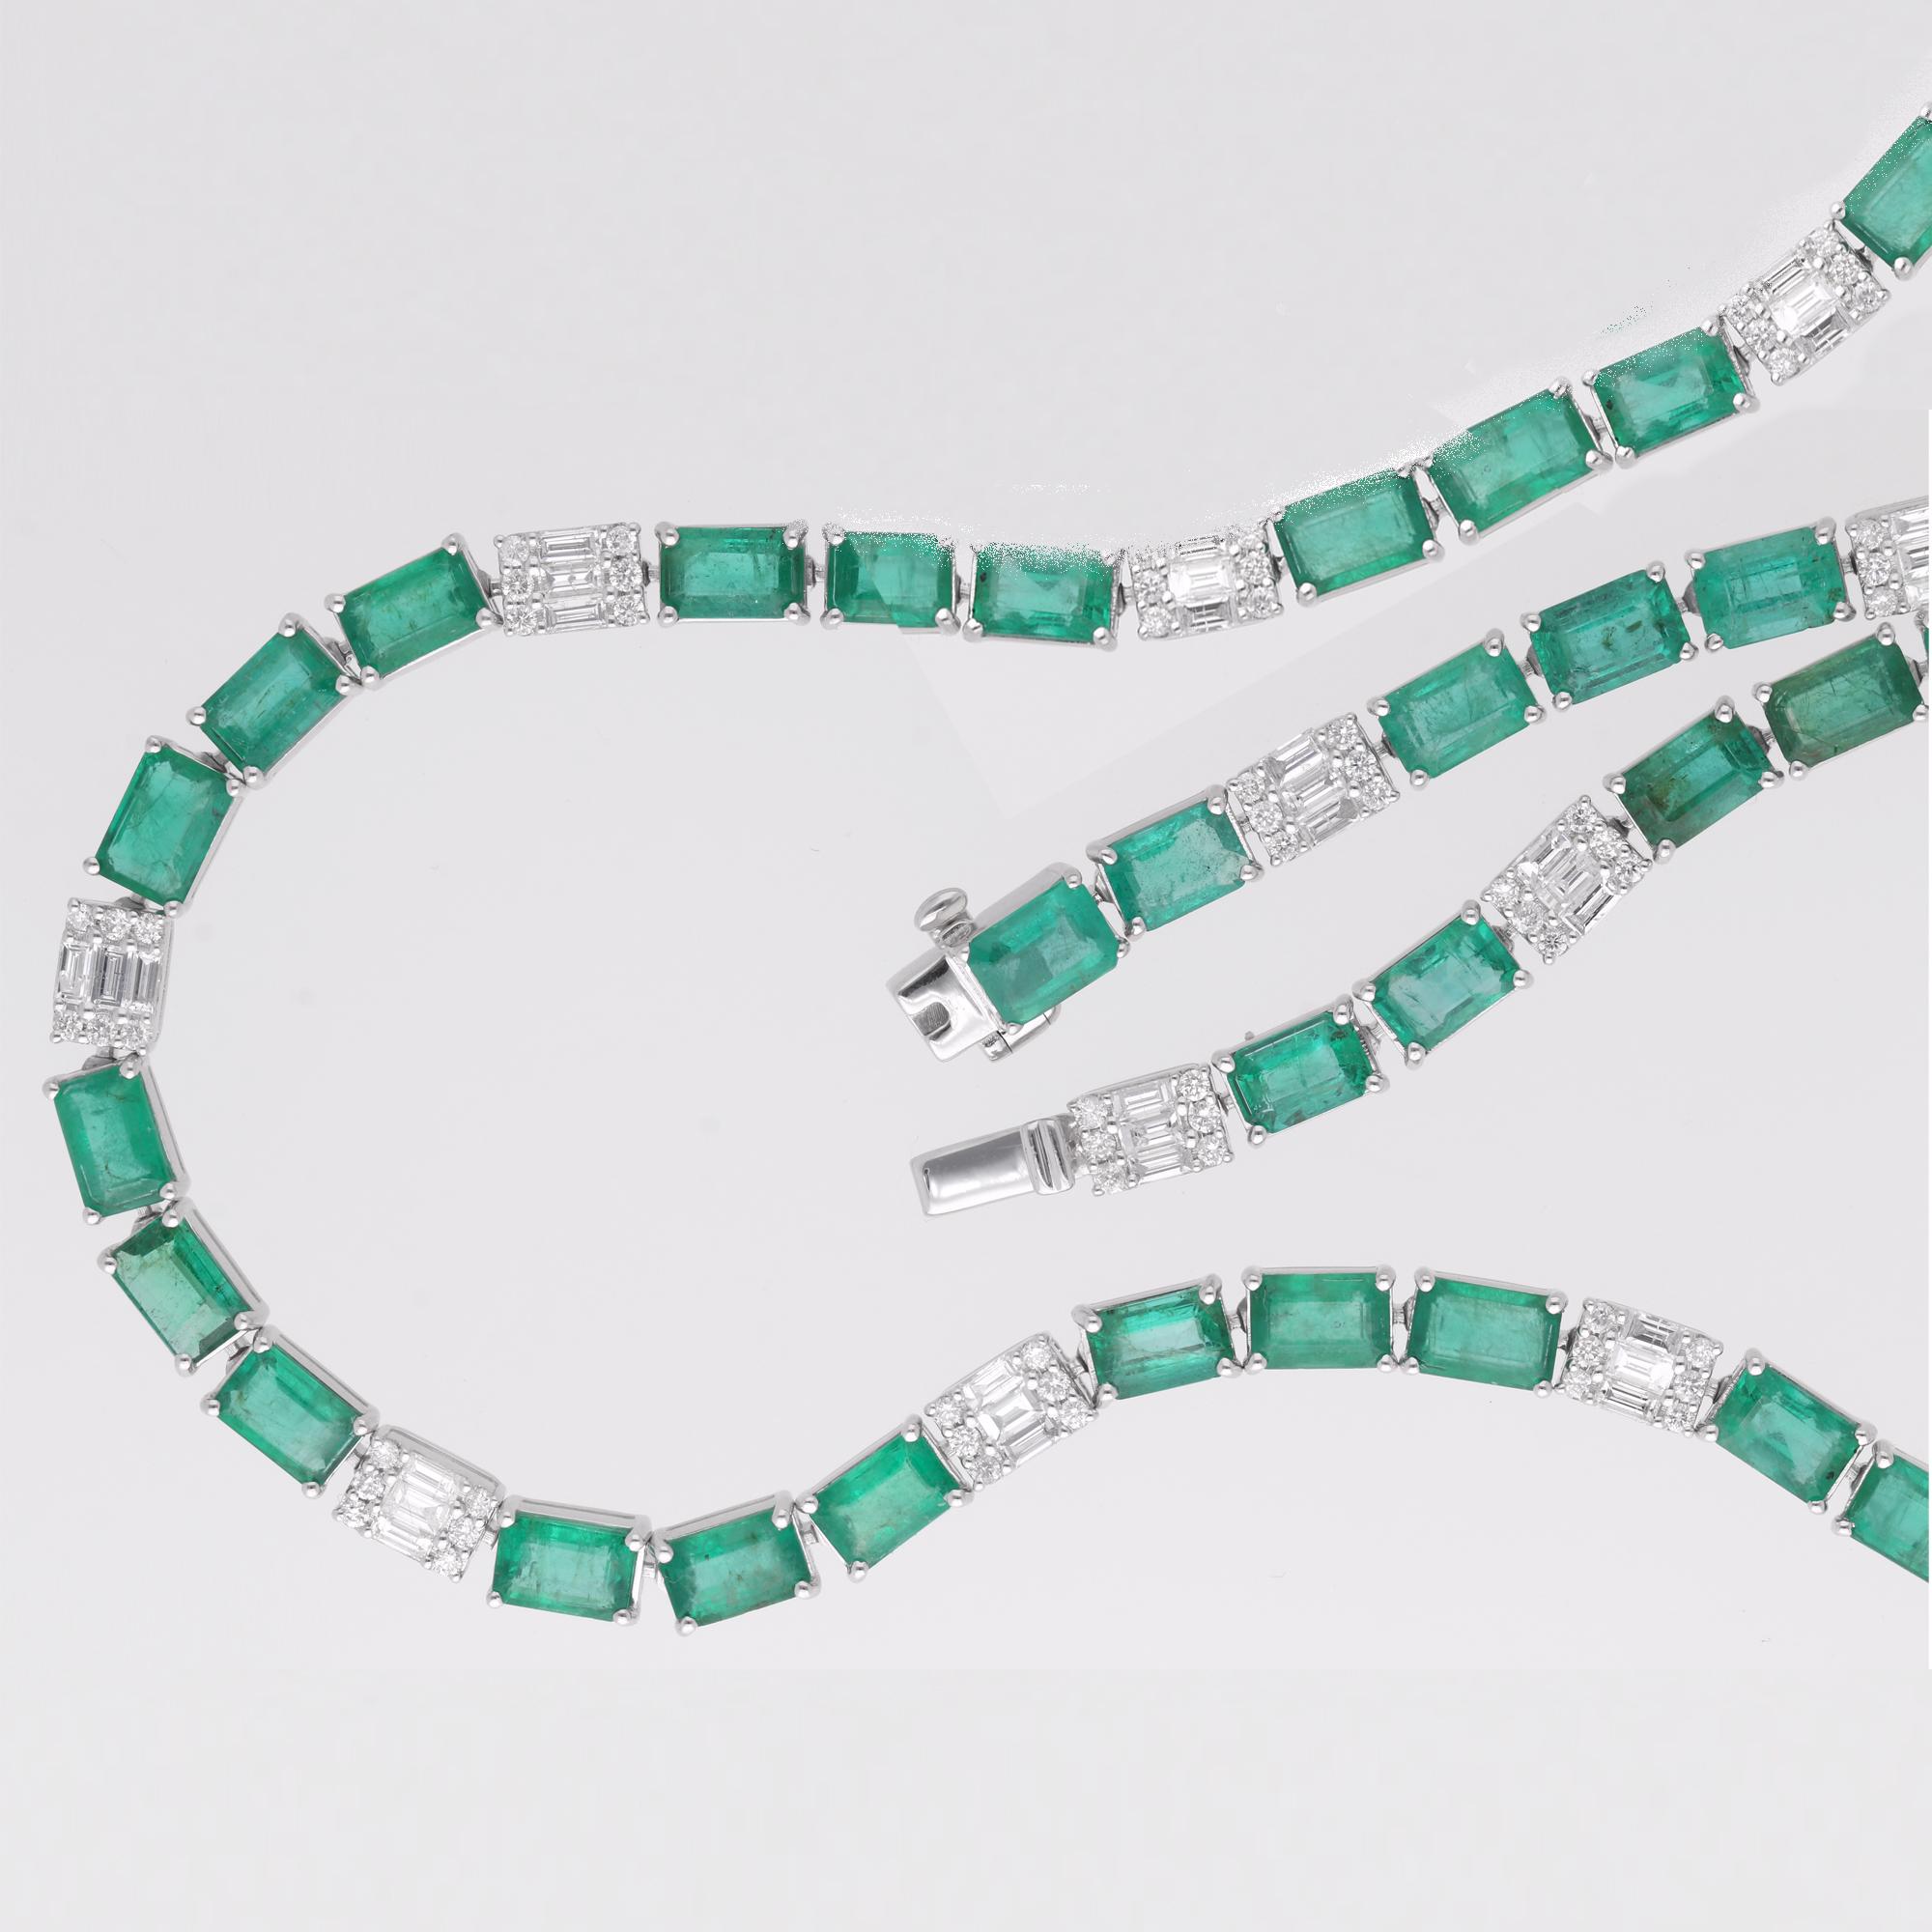 Baguette Zambian Emerald Gemstone Necklace Diamond 18 Karat White Gold Jewelry For Sale 2